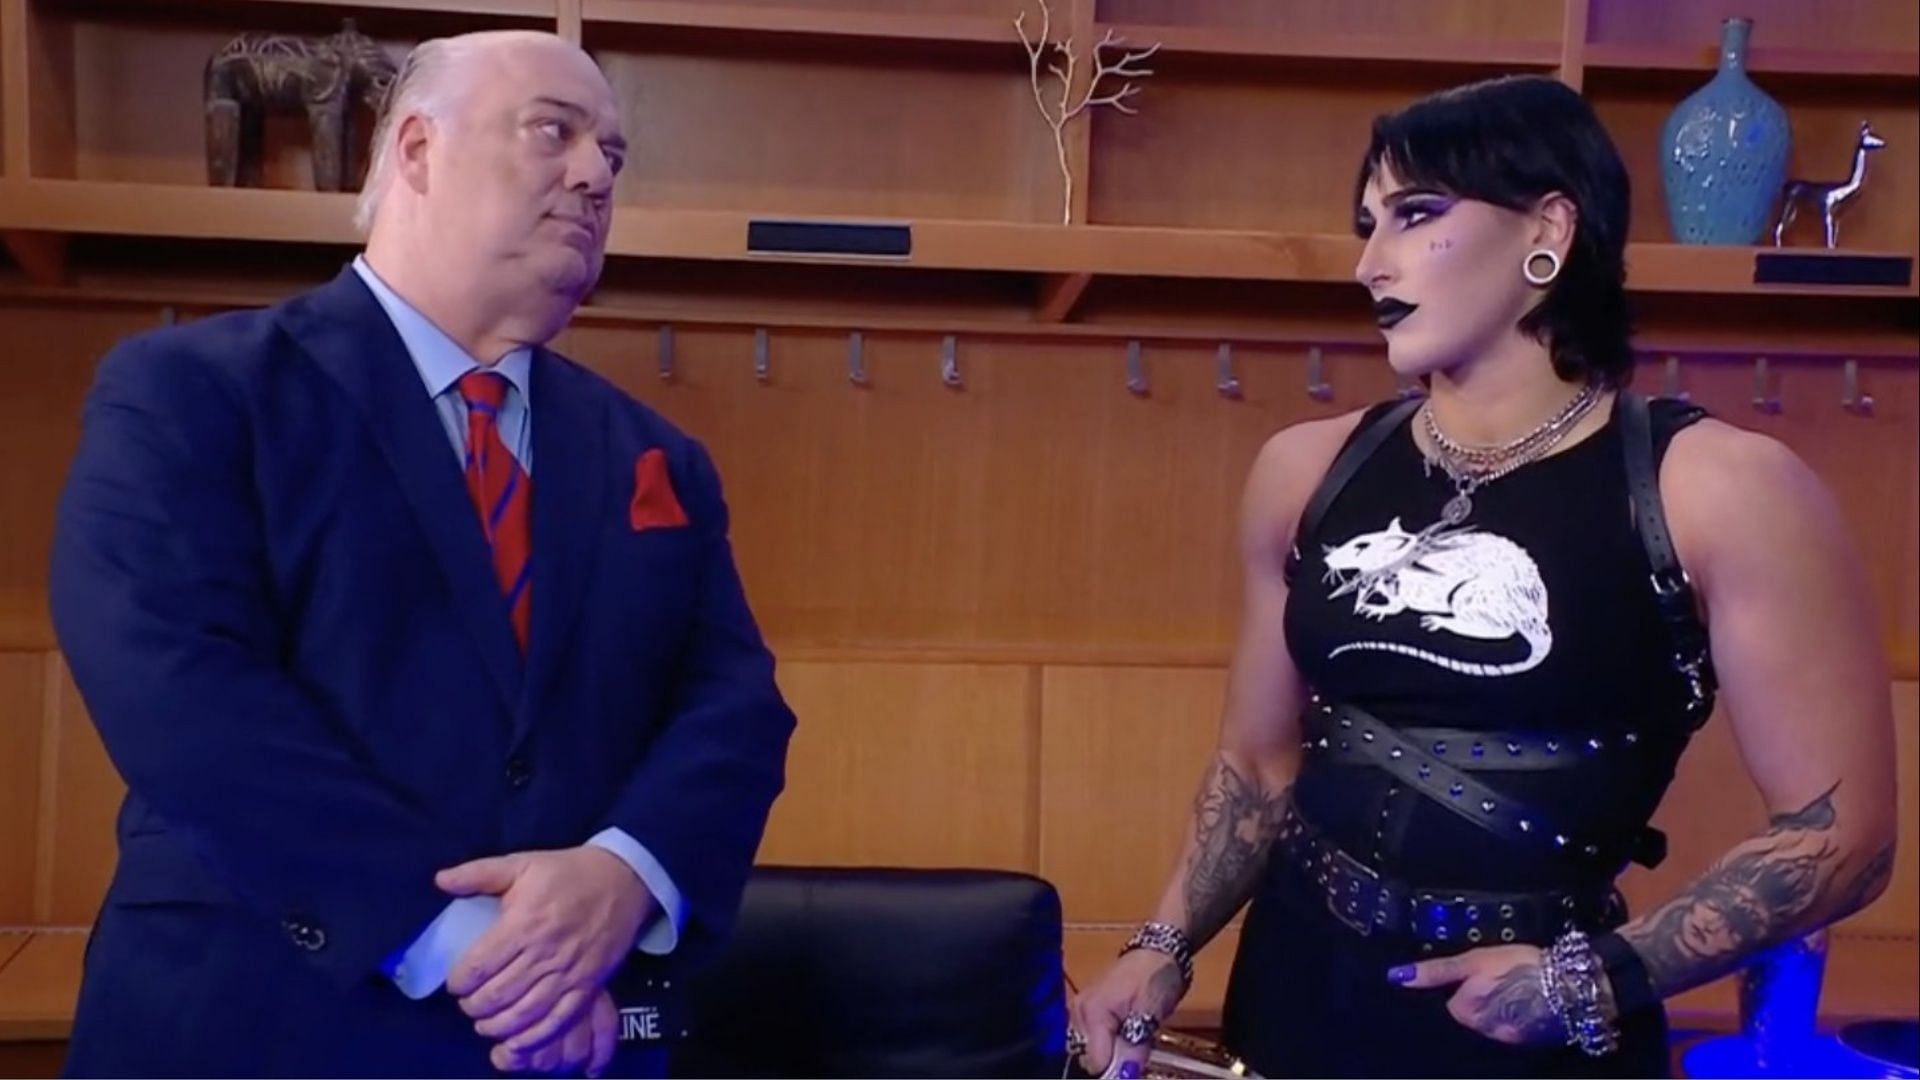 Paul Heyman and Rhea Ripley had a tense segment on SmackDown this week.